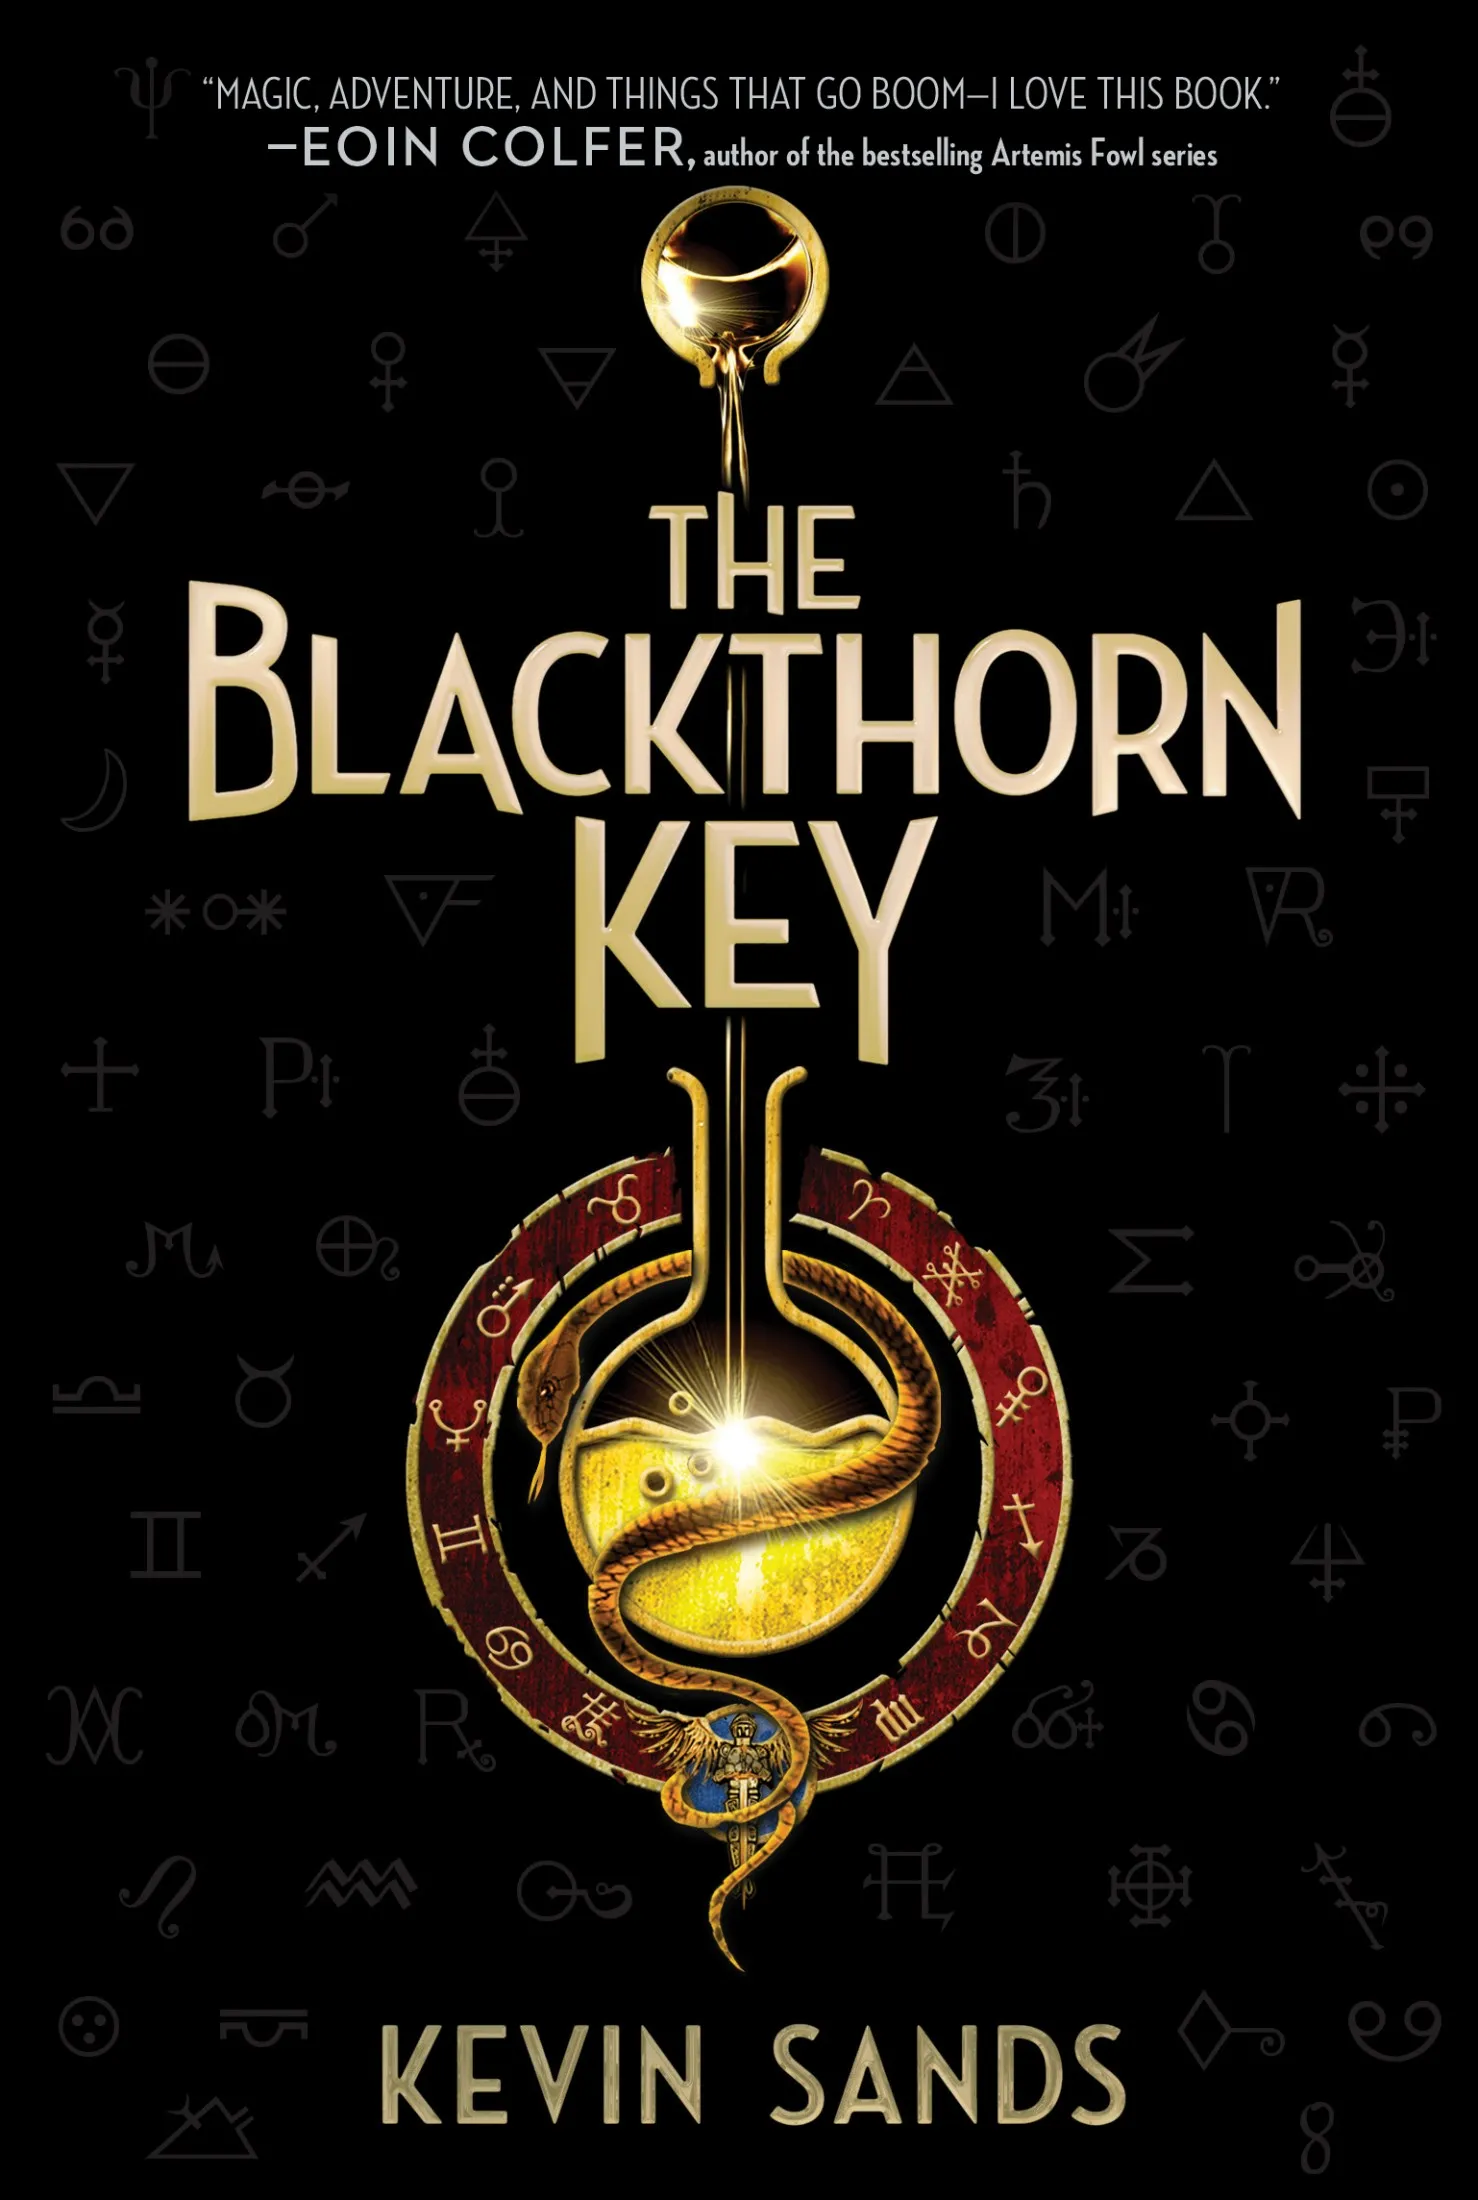 The Blackthorn Key (The Blackthorn Key #1)